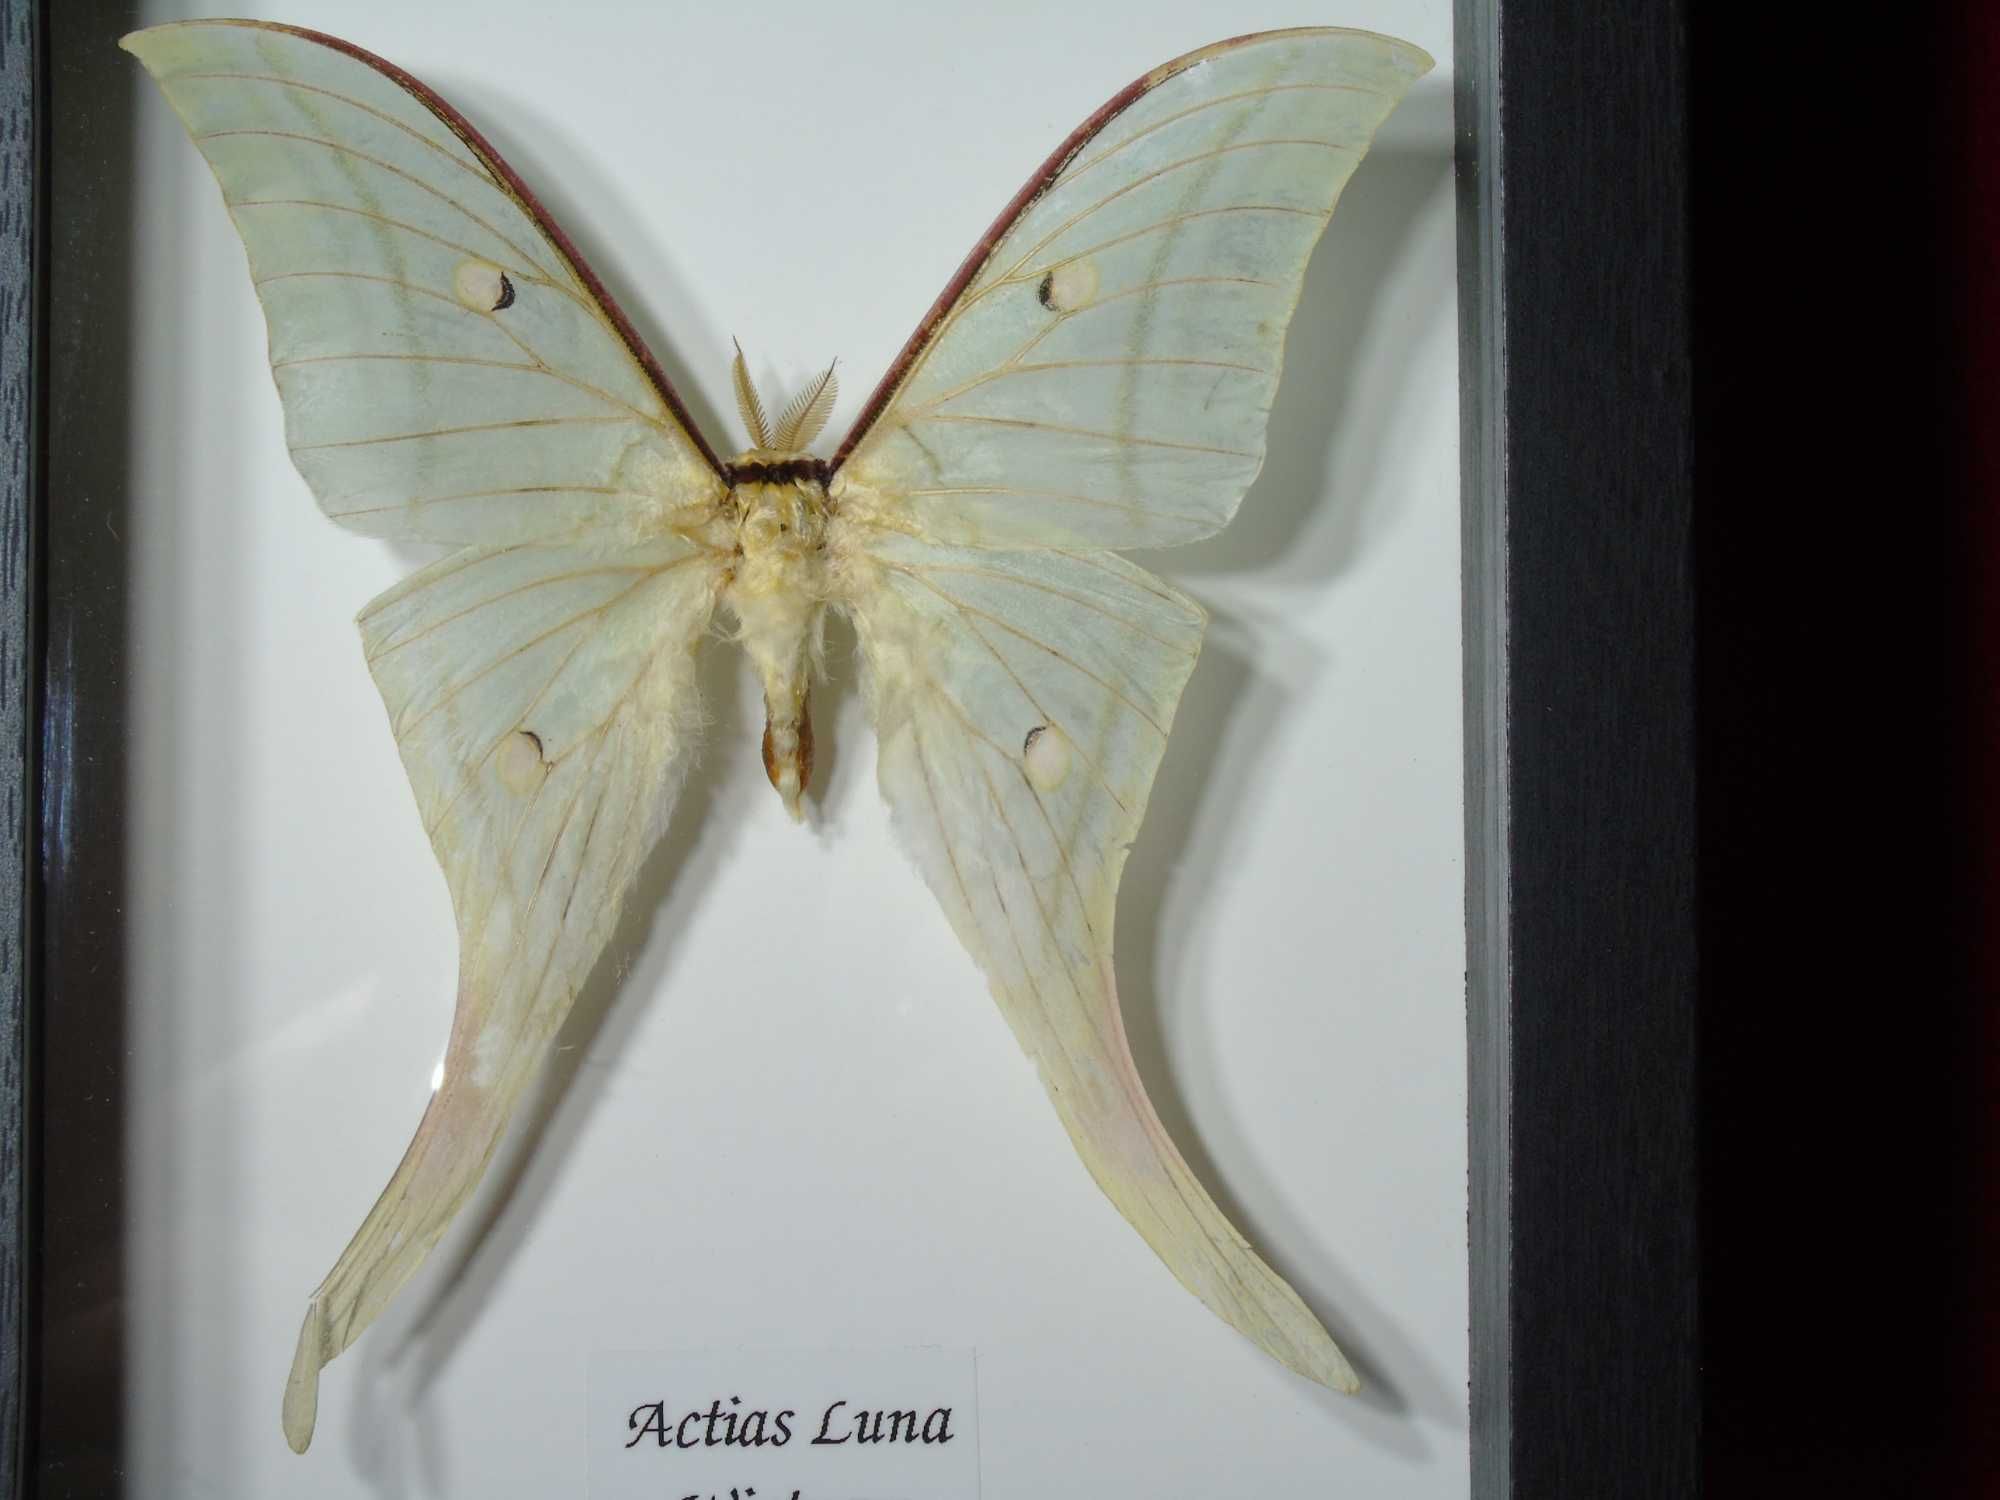 Motyl w ramce / gablotce 17 x 22 cm . Actias luna 125 mm .